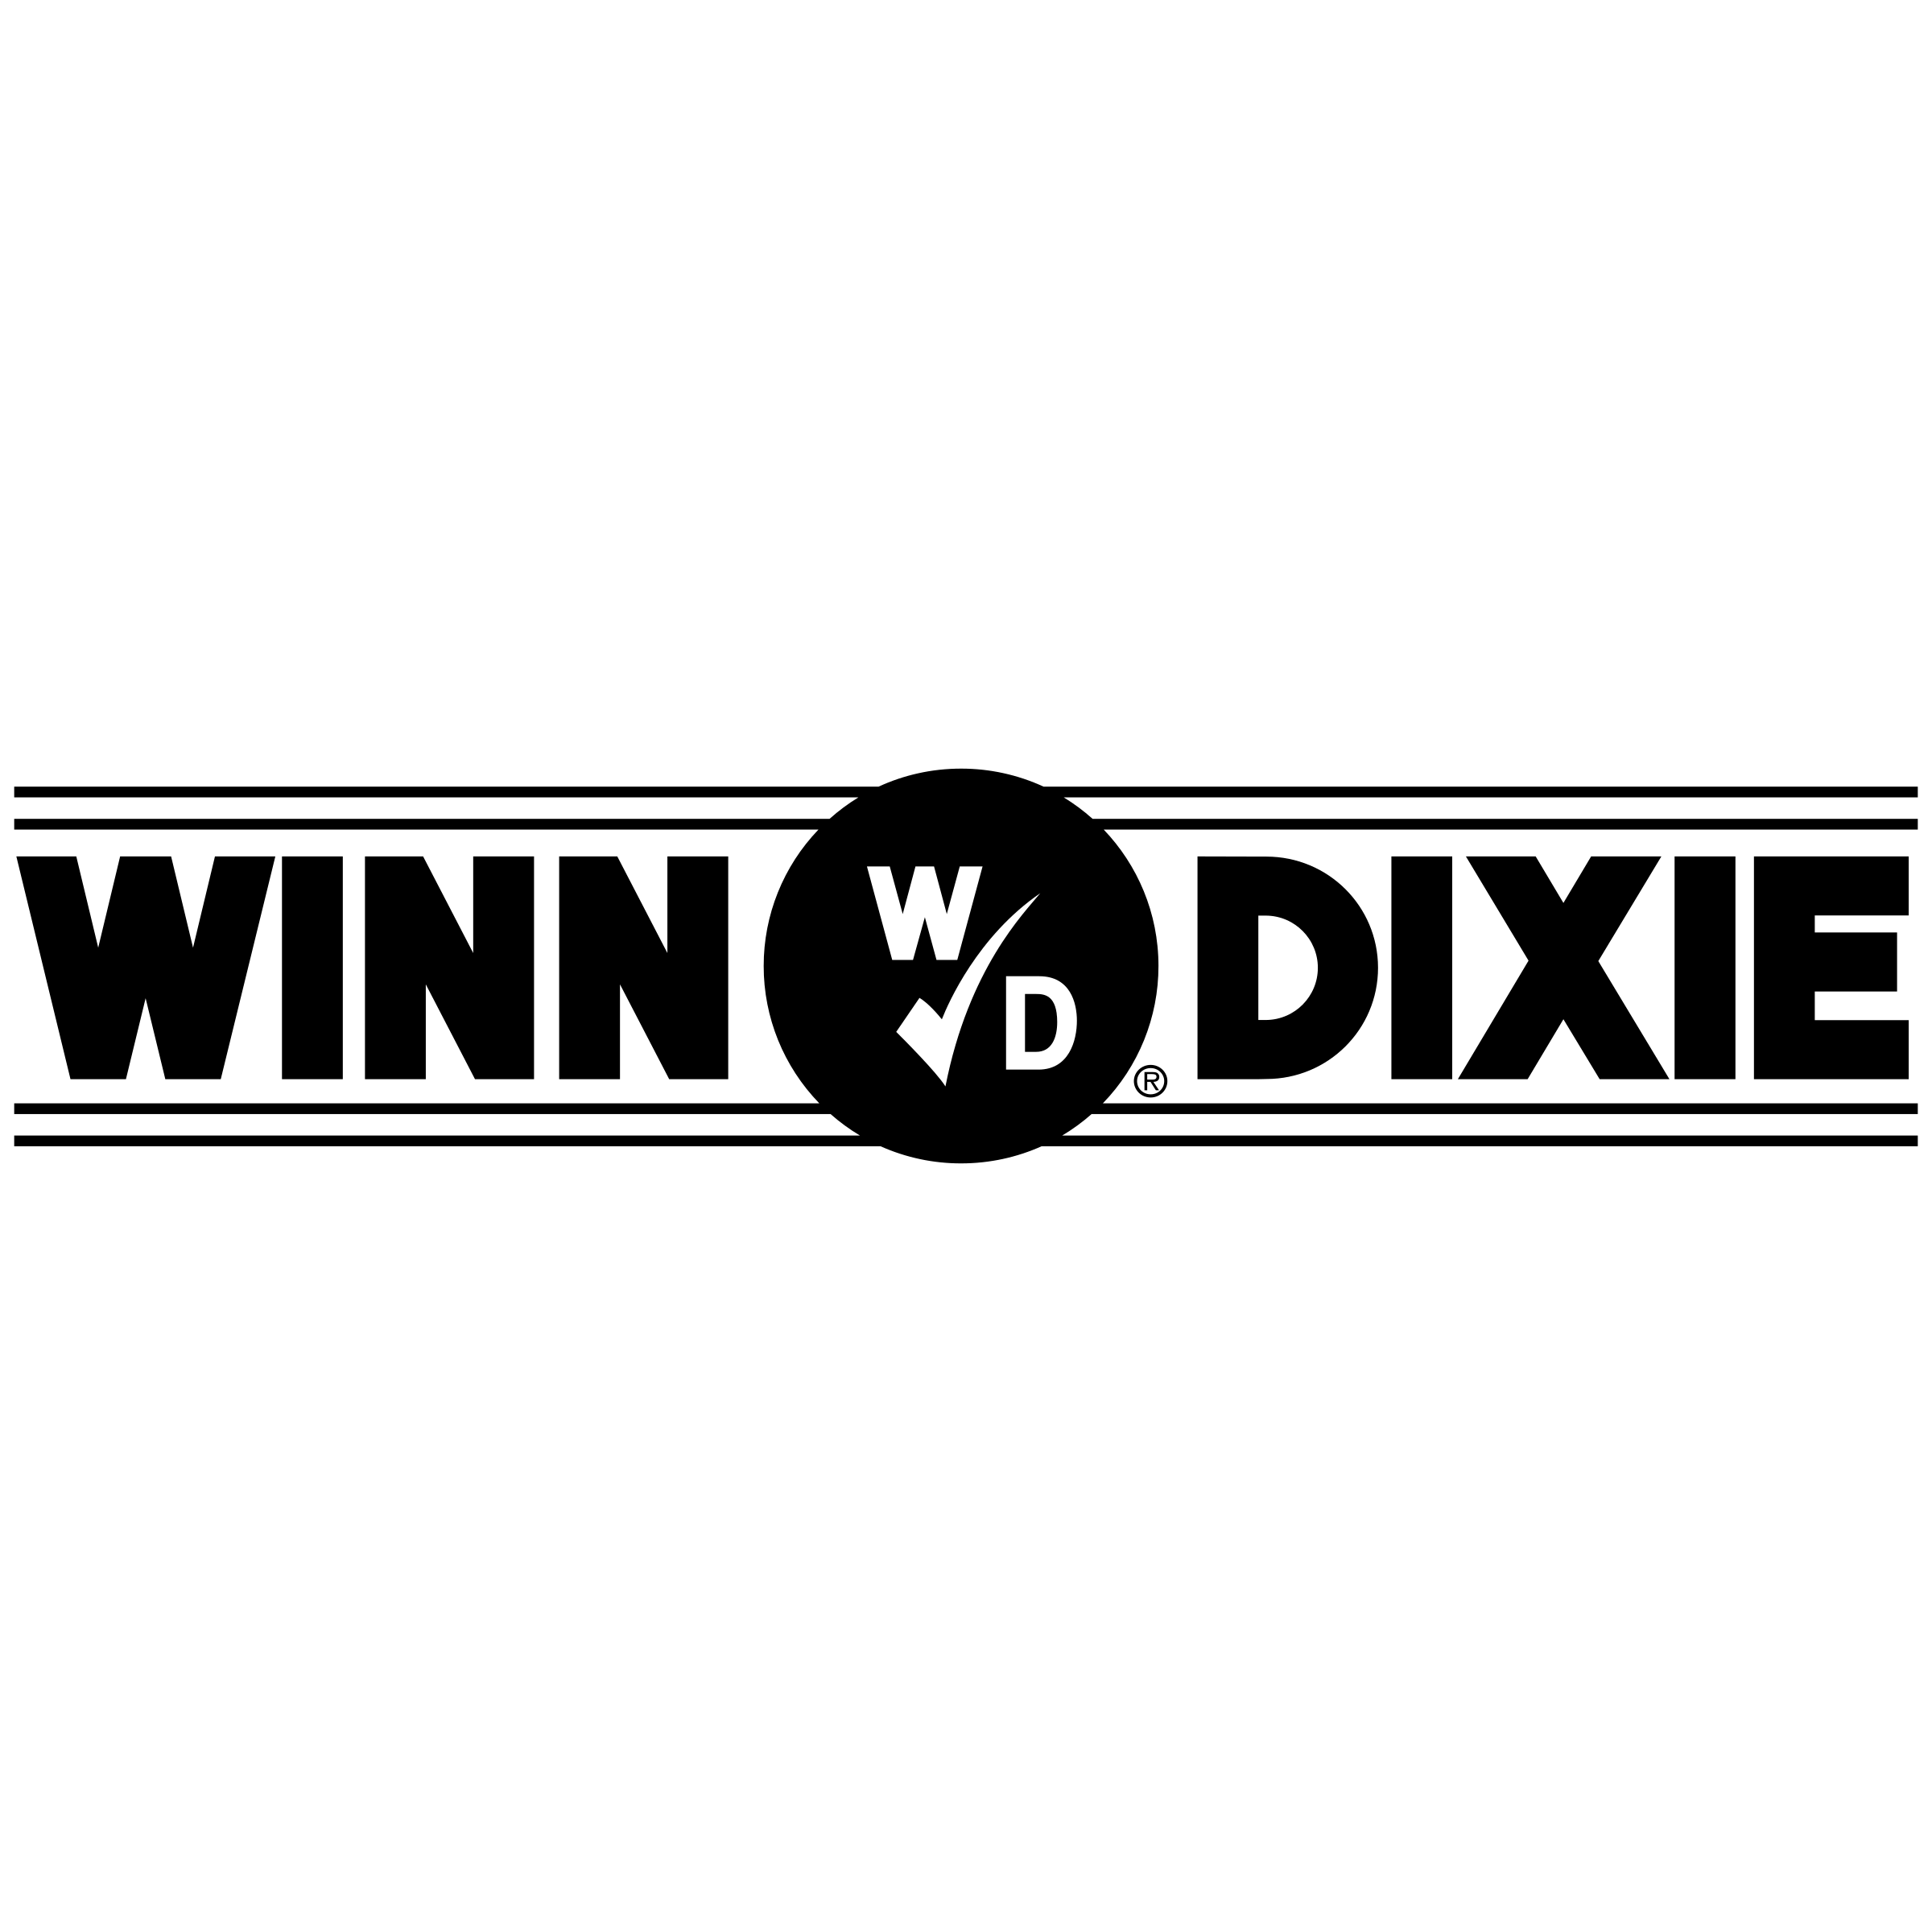 Winn-Dixie Logo - Winn Dixie Logo PNG Transparent & SVG Vector - Freebie Supply